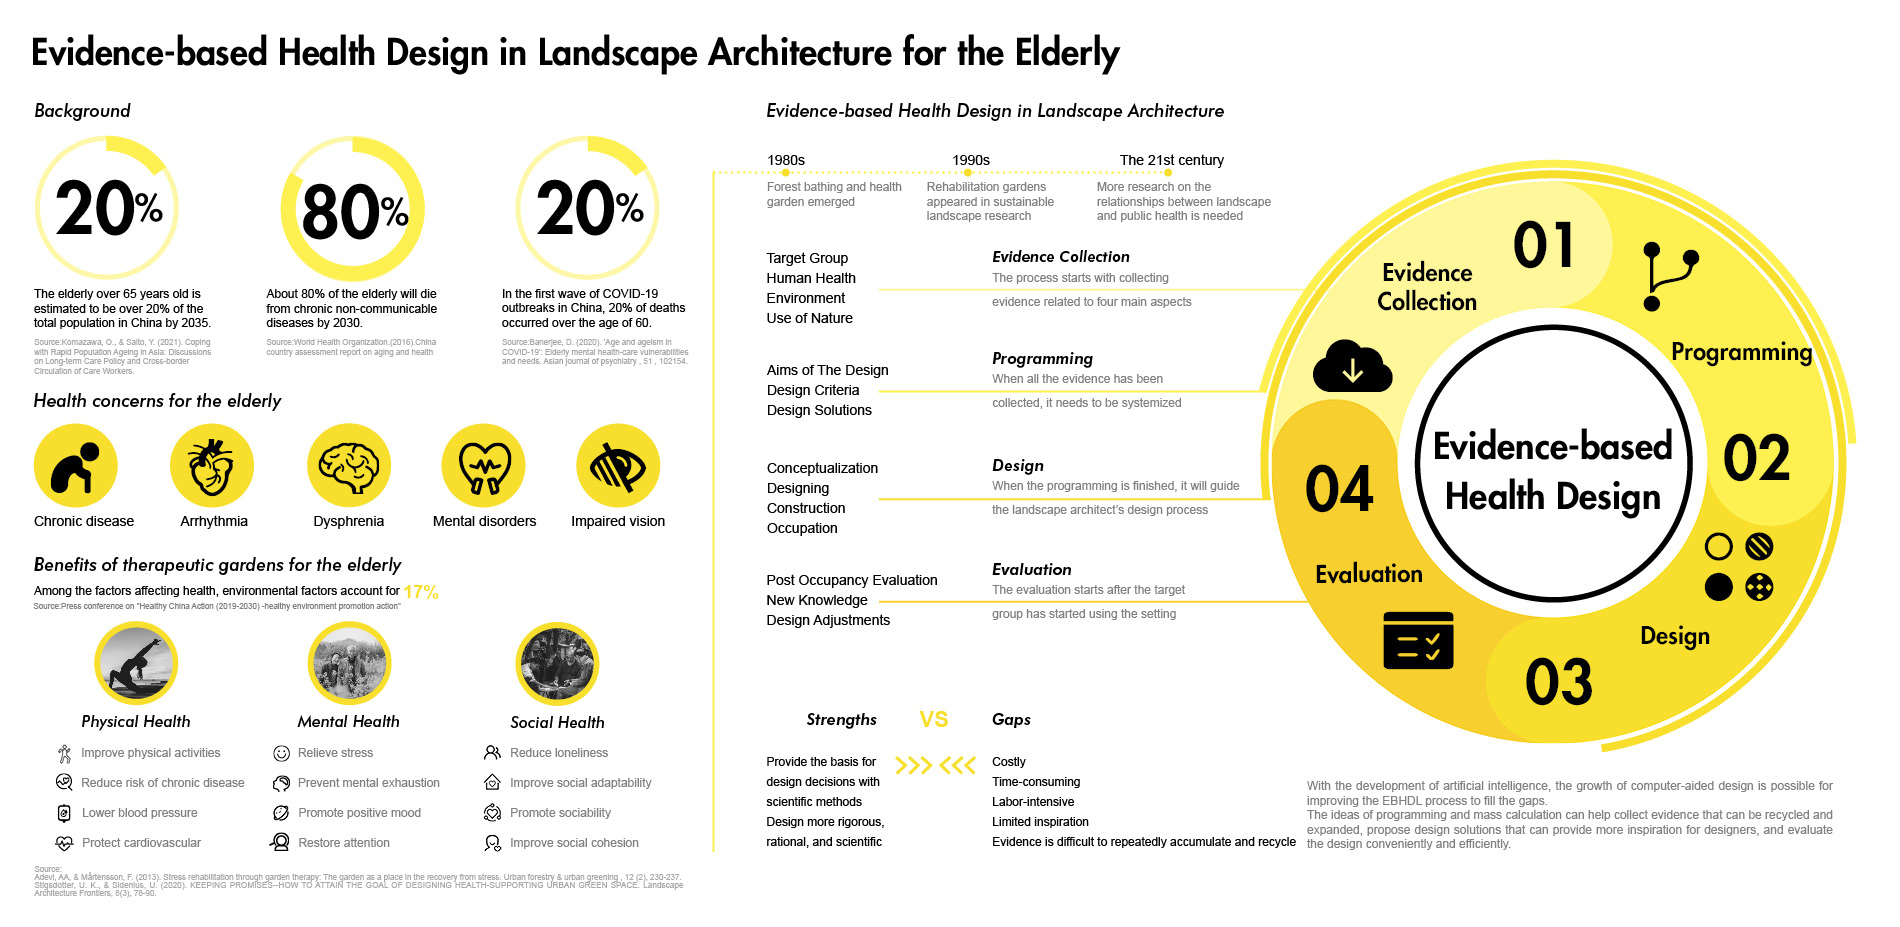 Evidence-based Health Design in Landscape Architecture for the Elderly